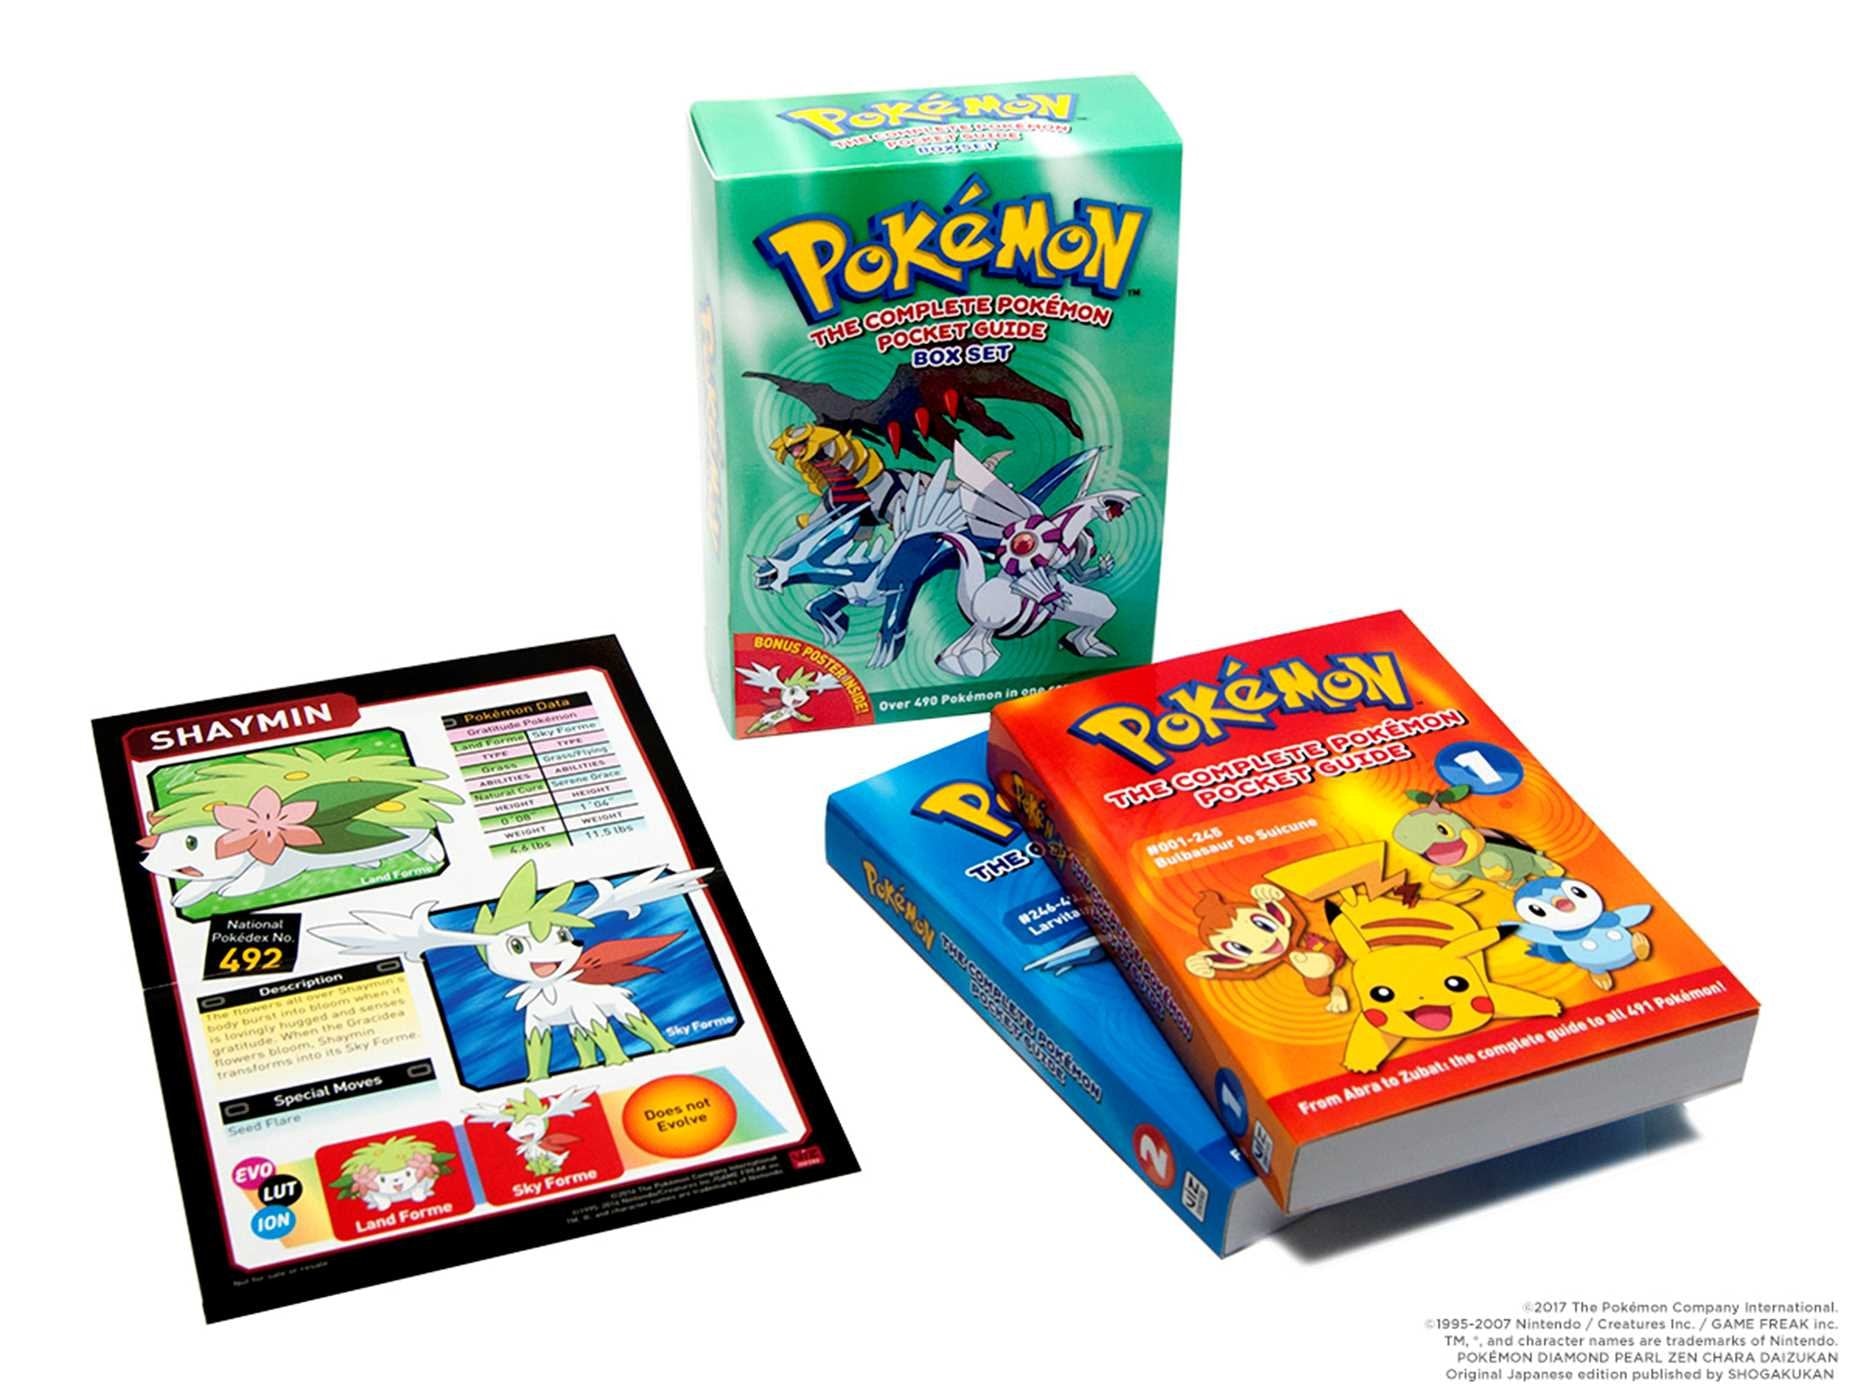 The Complete Pokémon Pocket Guide